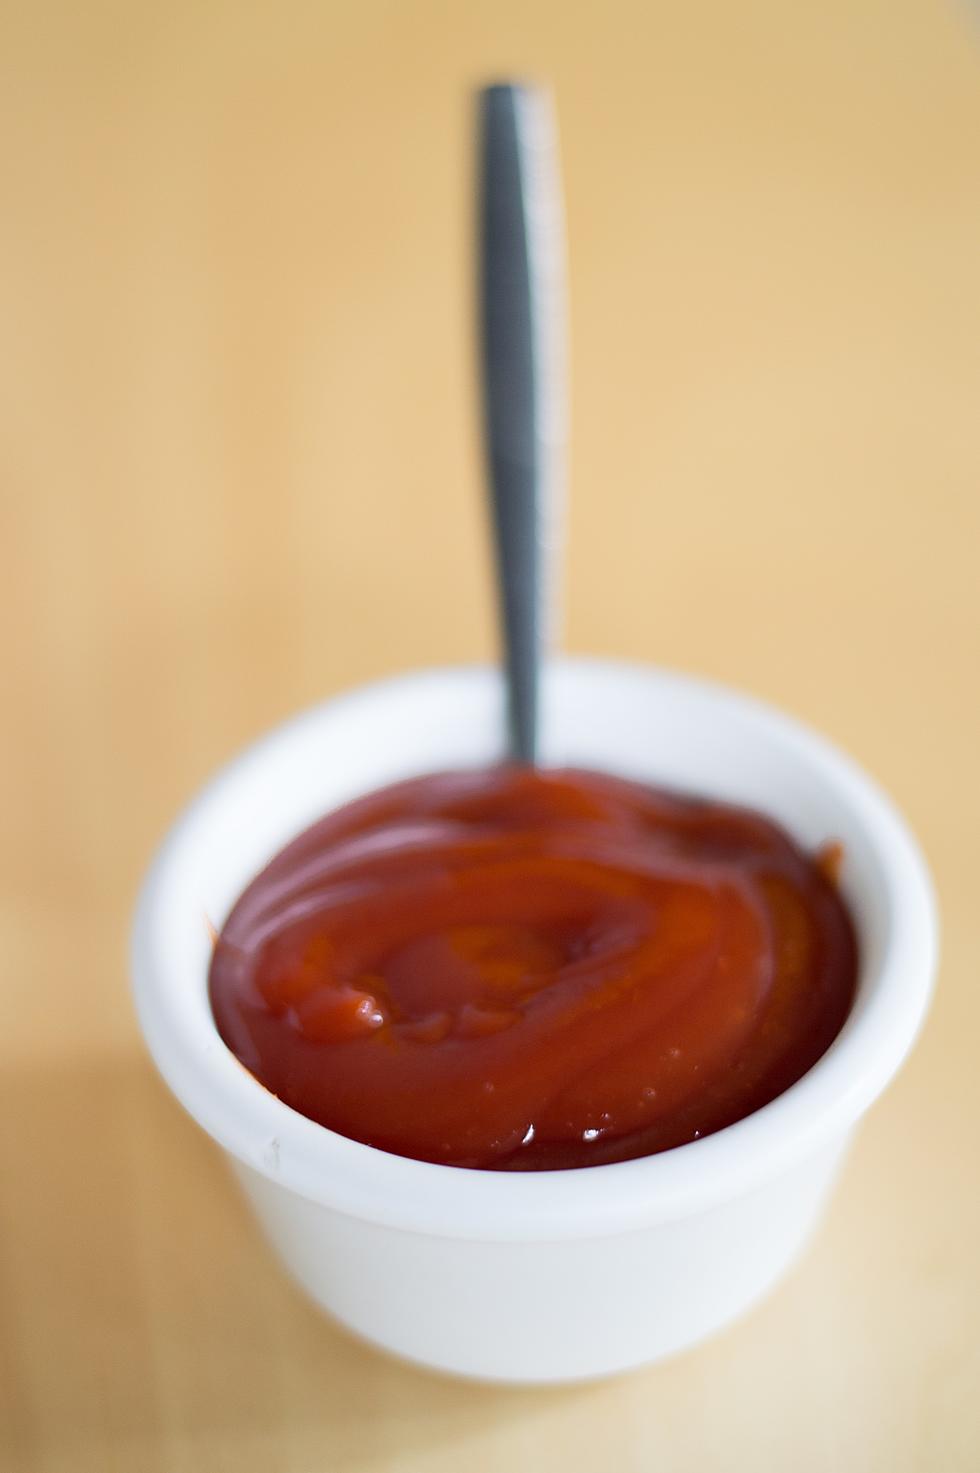 Michigan’s Favorite Sauce Is Ketchup?